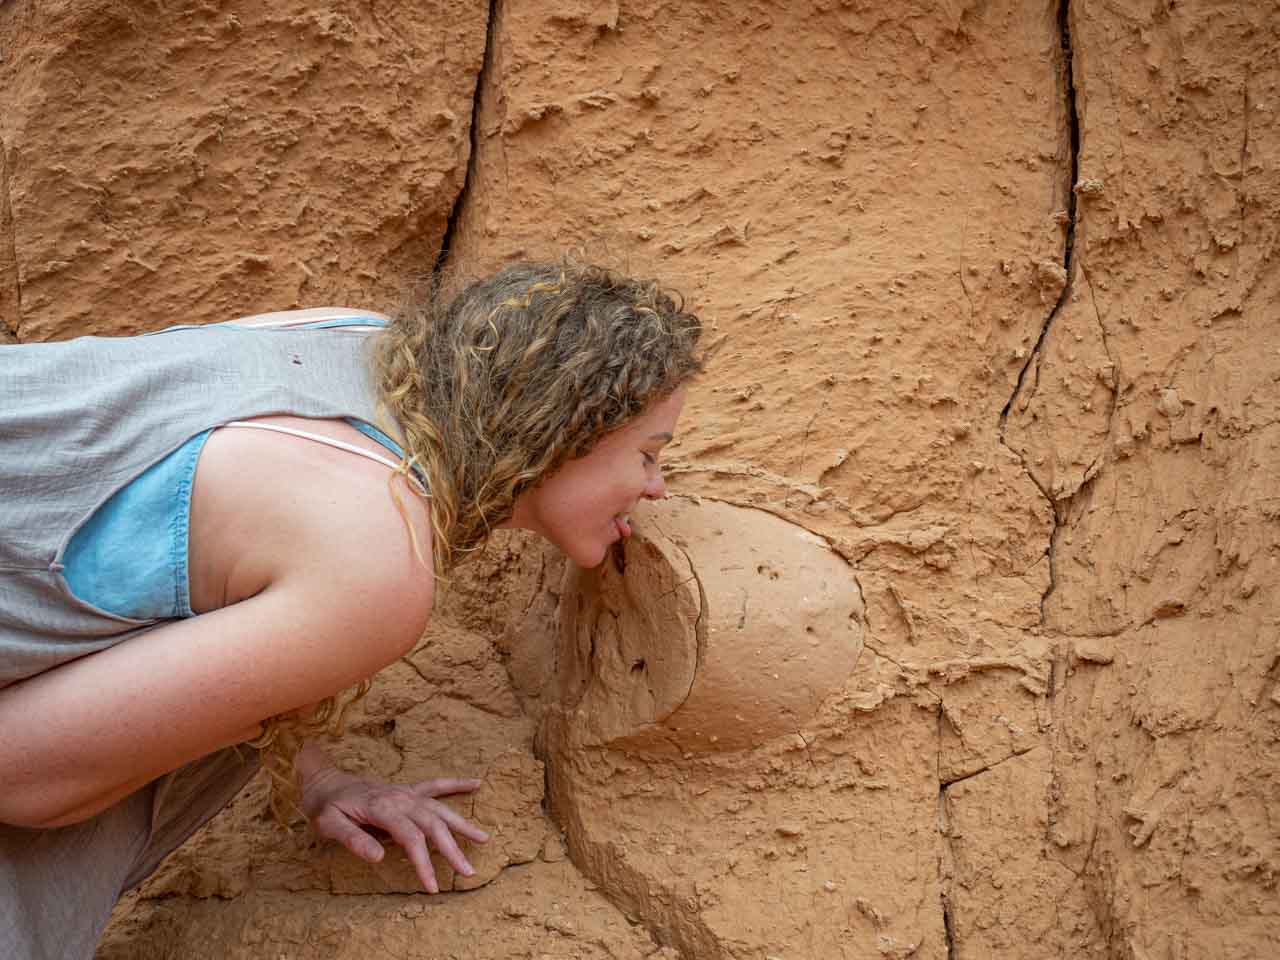 A woman licks a dinosaur bone sticking out of a cliff face.